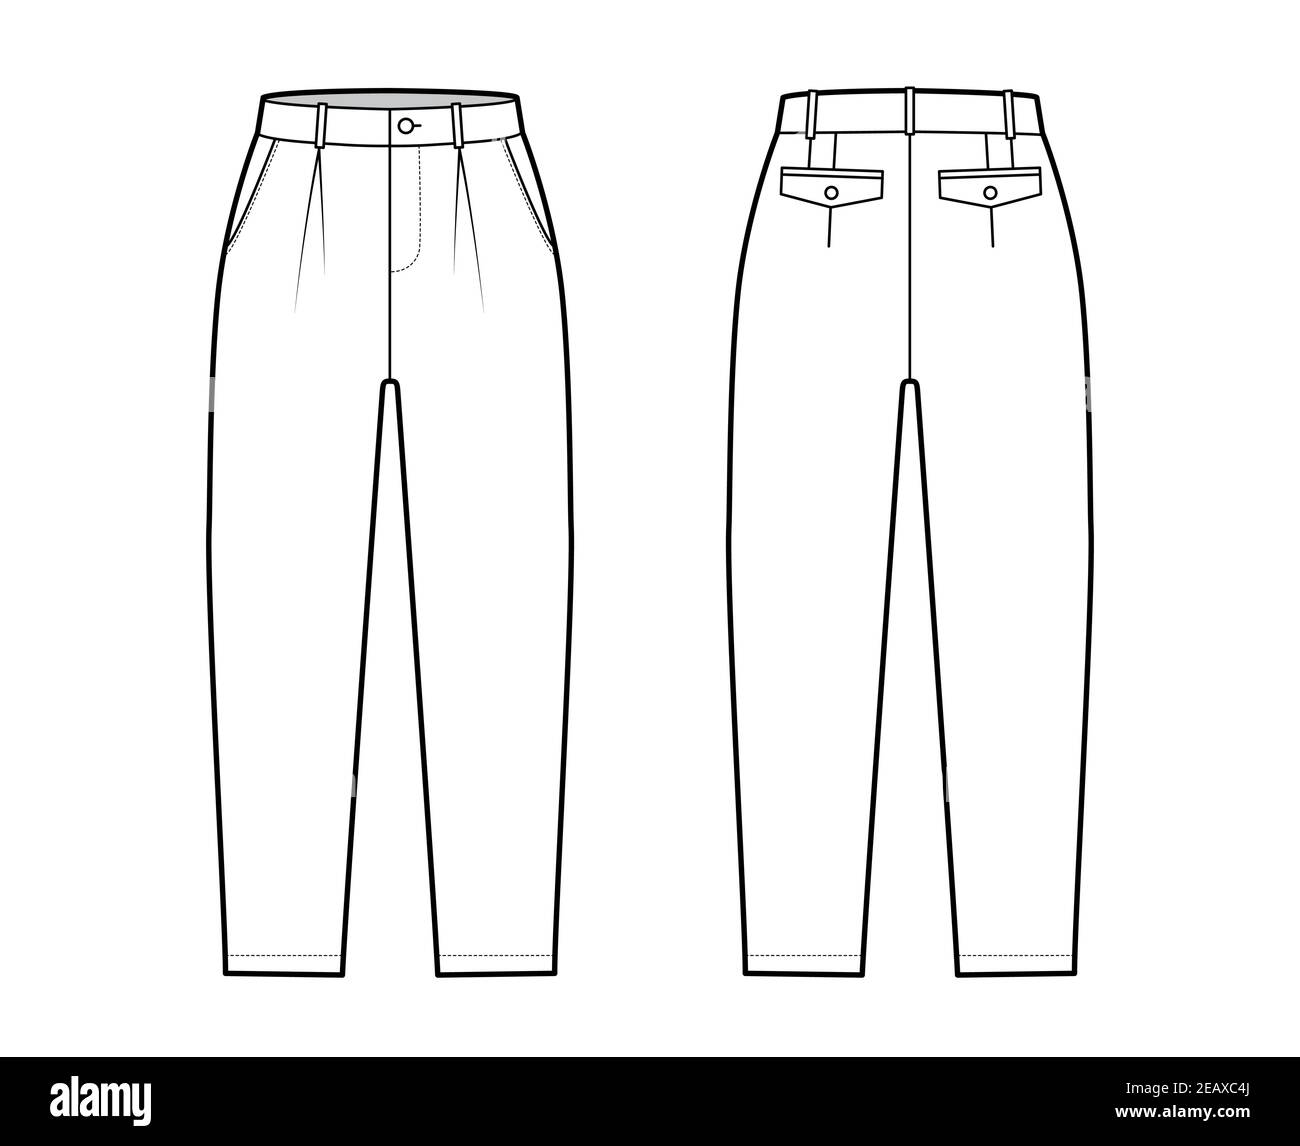 Capri pants technical fashion illustration with belt loops, calf